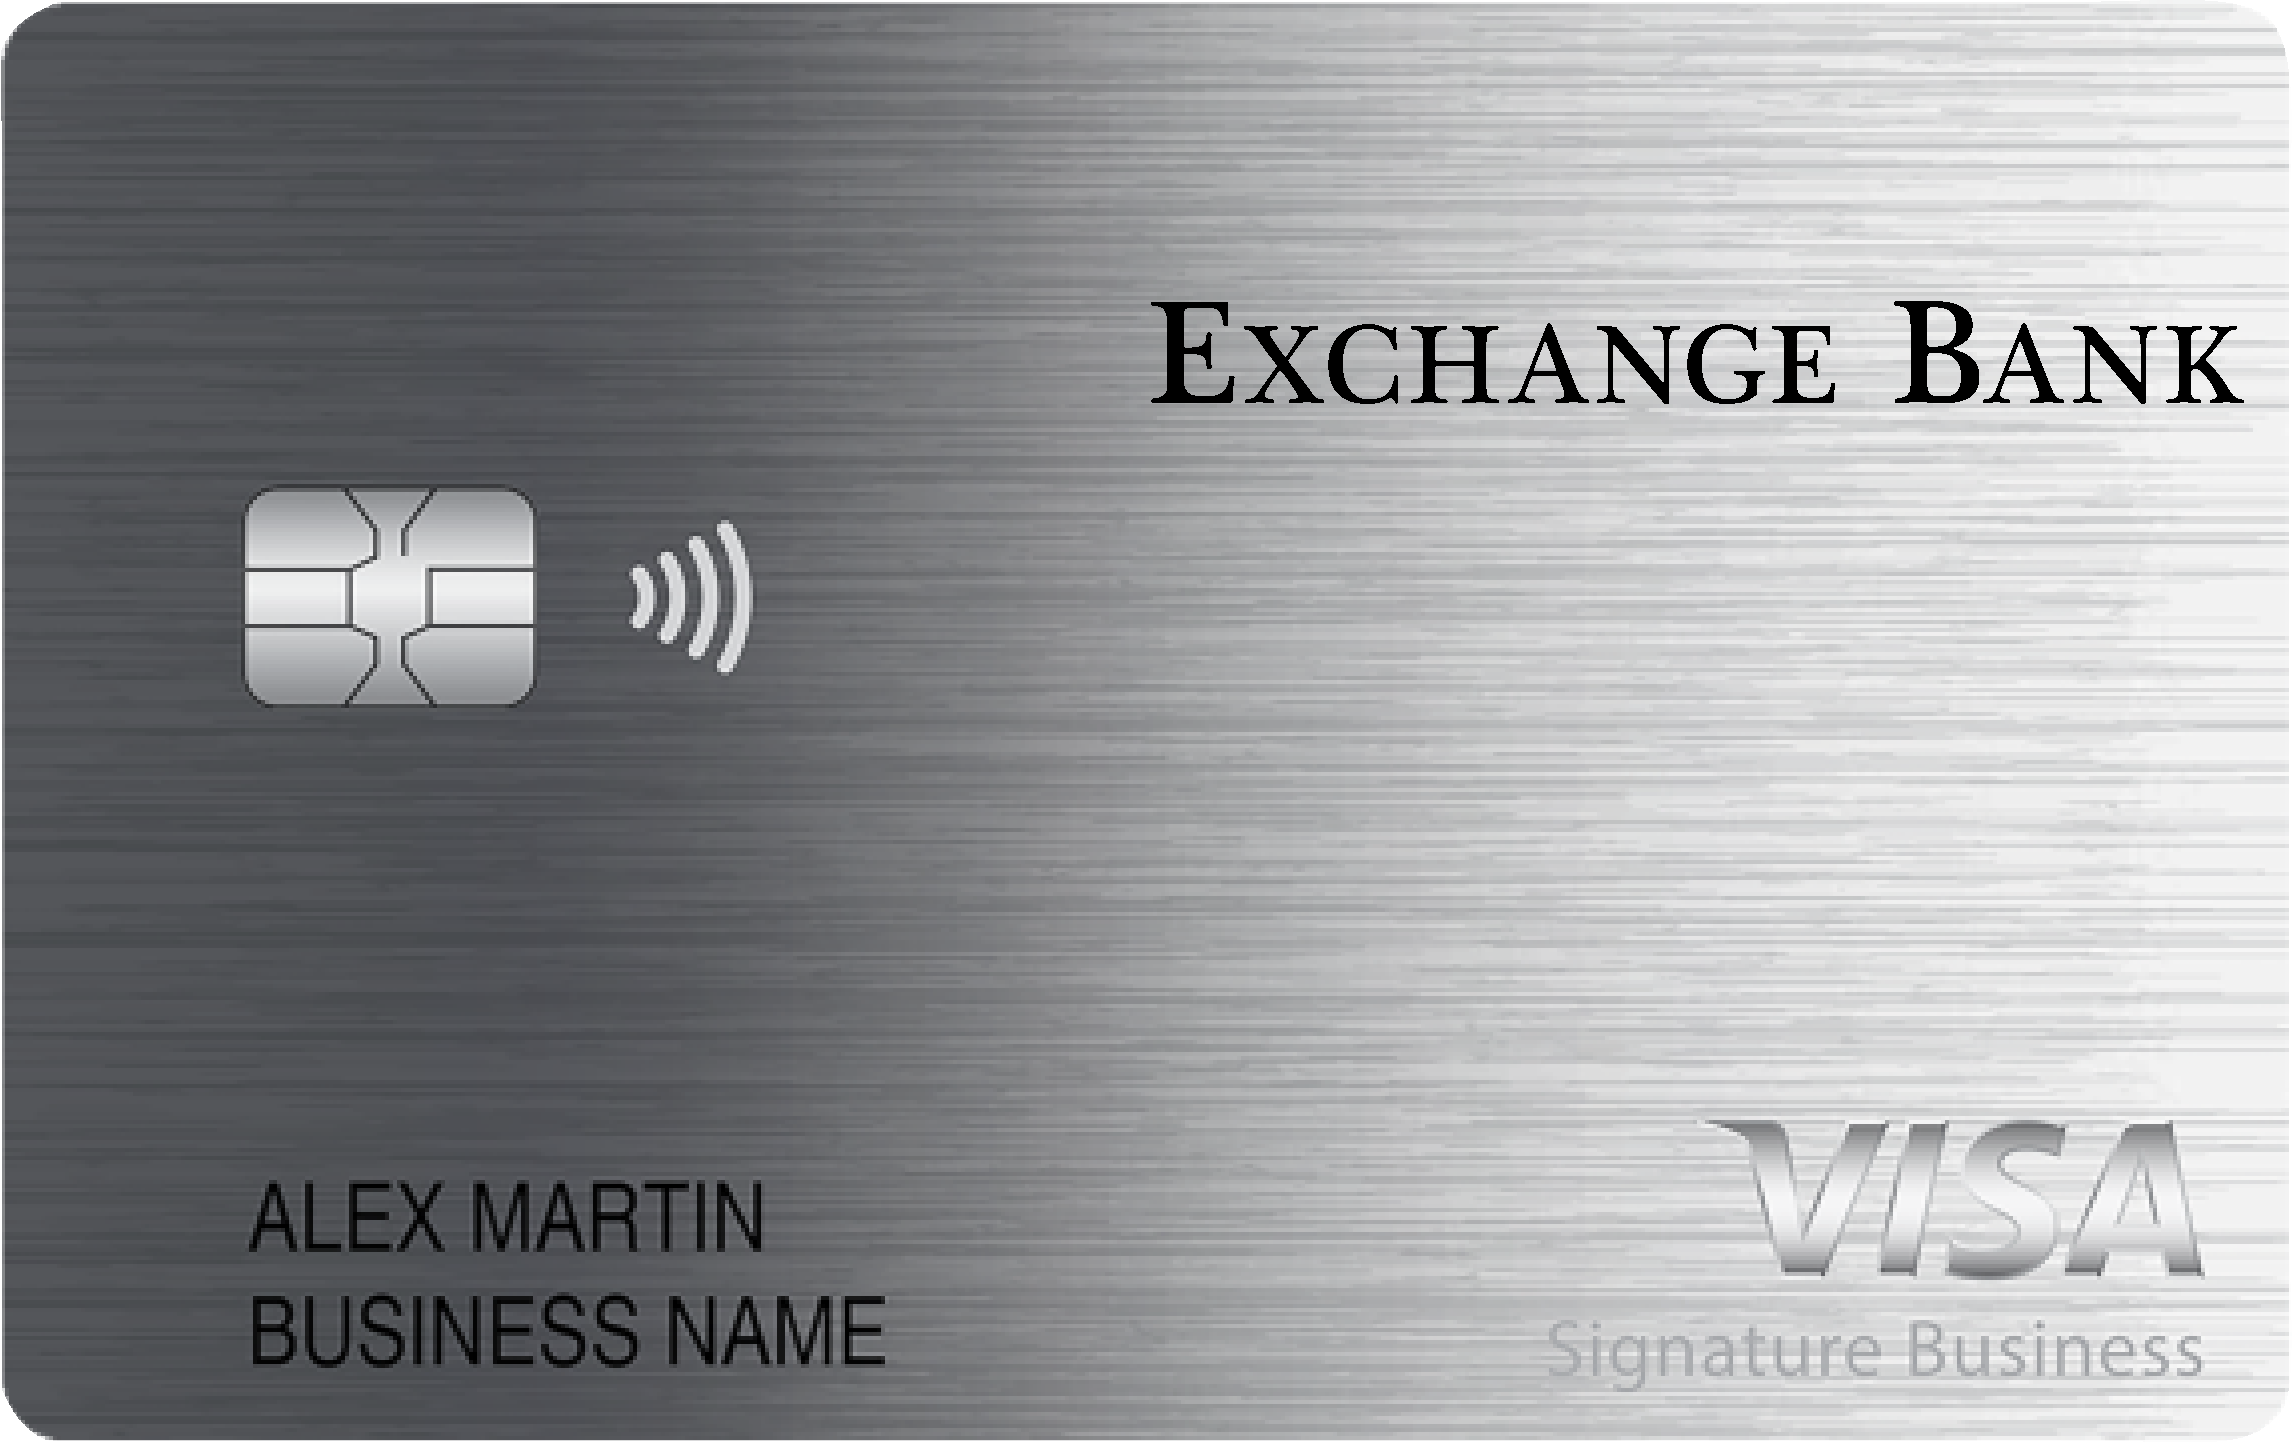 Exchange Bank Smart Business Rewards Card